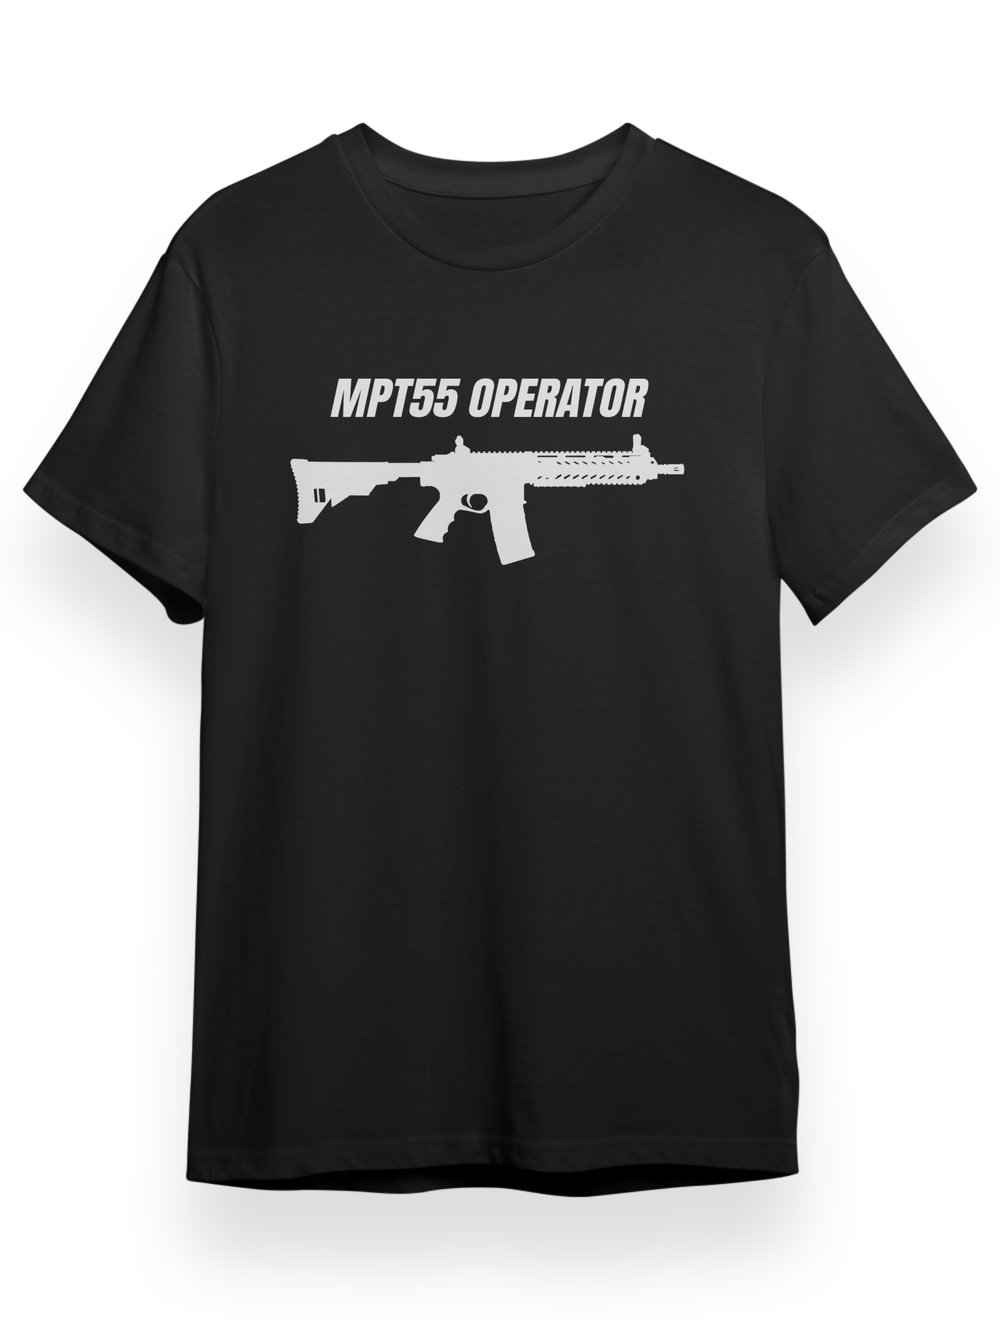 MPT55 OPERATOR